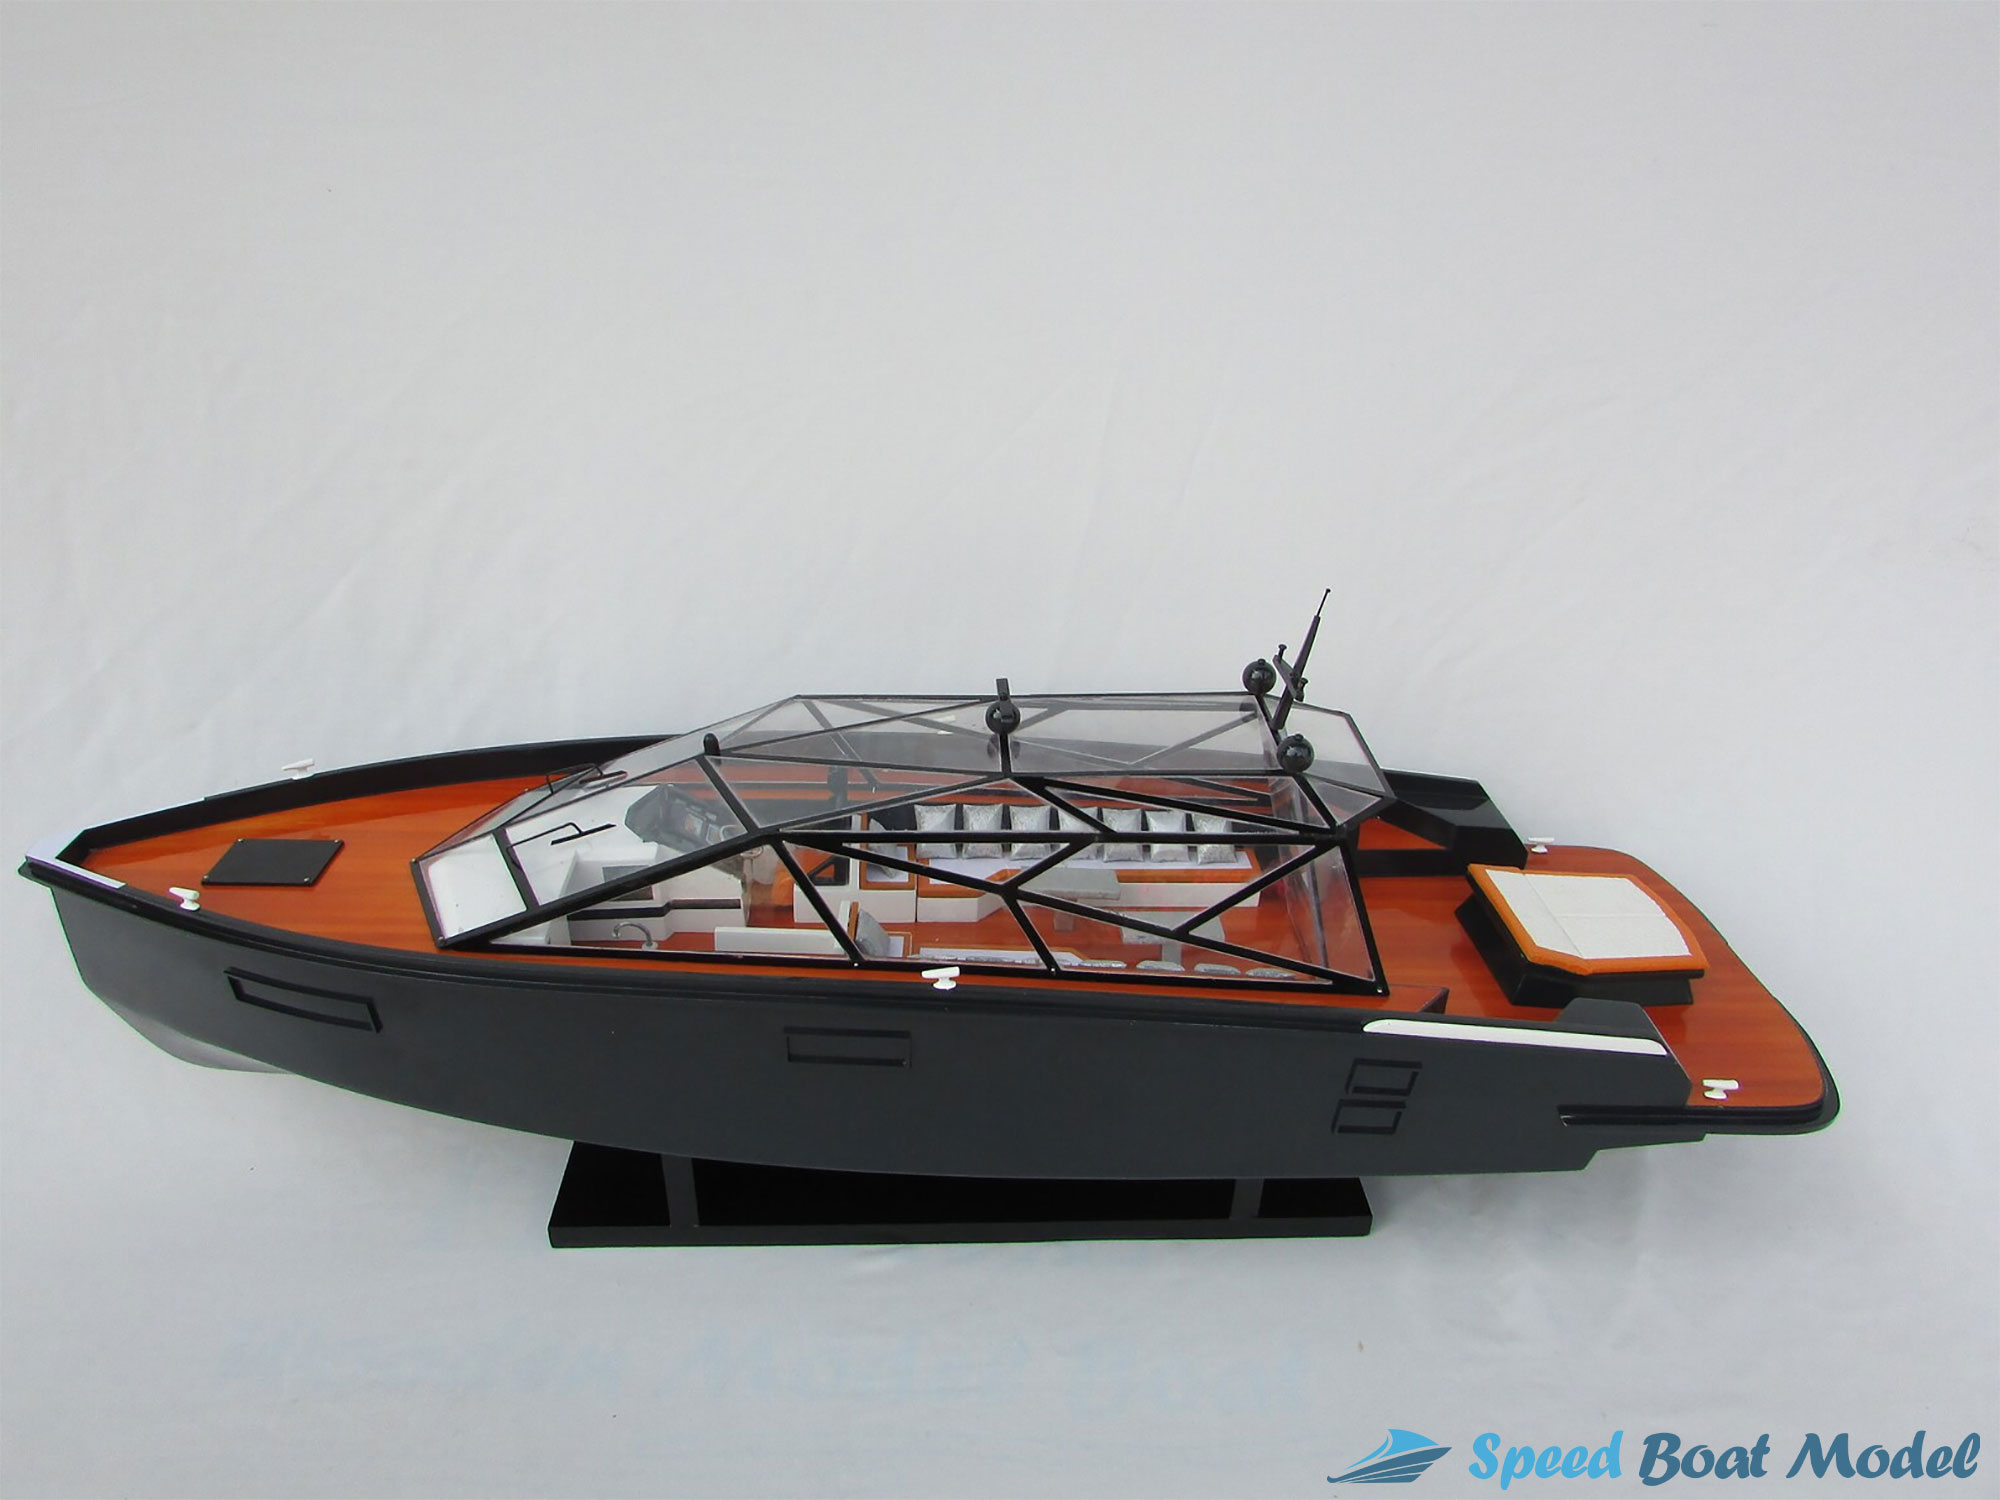 Xanazu Modern Yacht Model 28